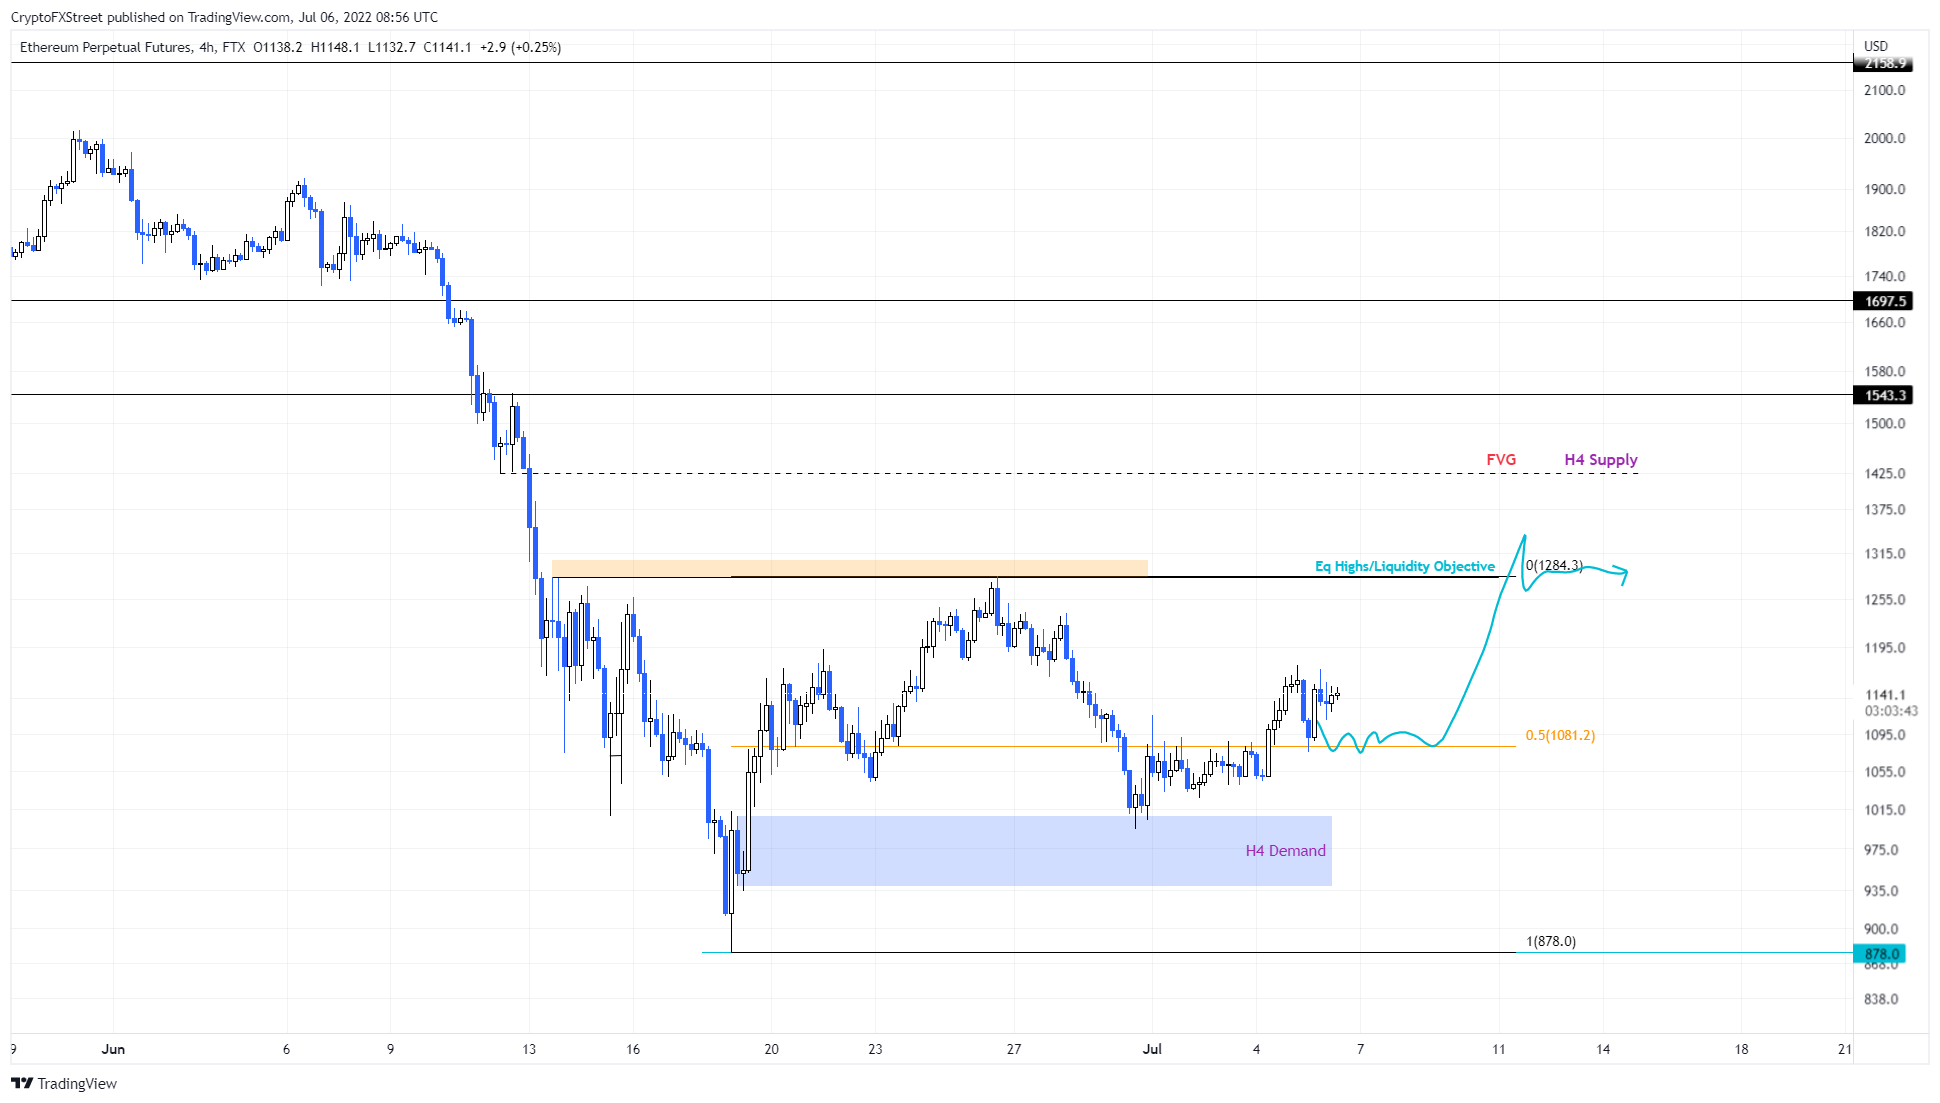 ETH / USD 4-hour chart